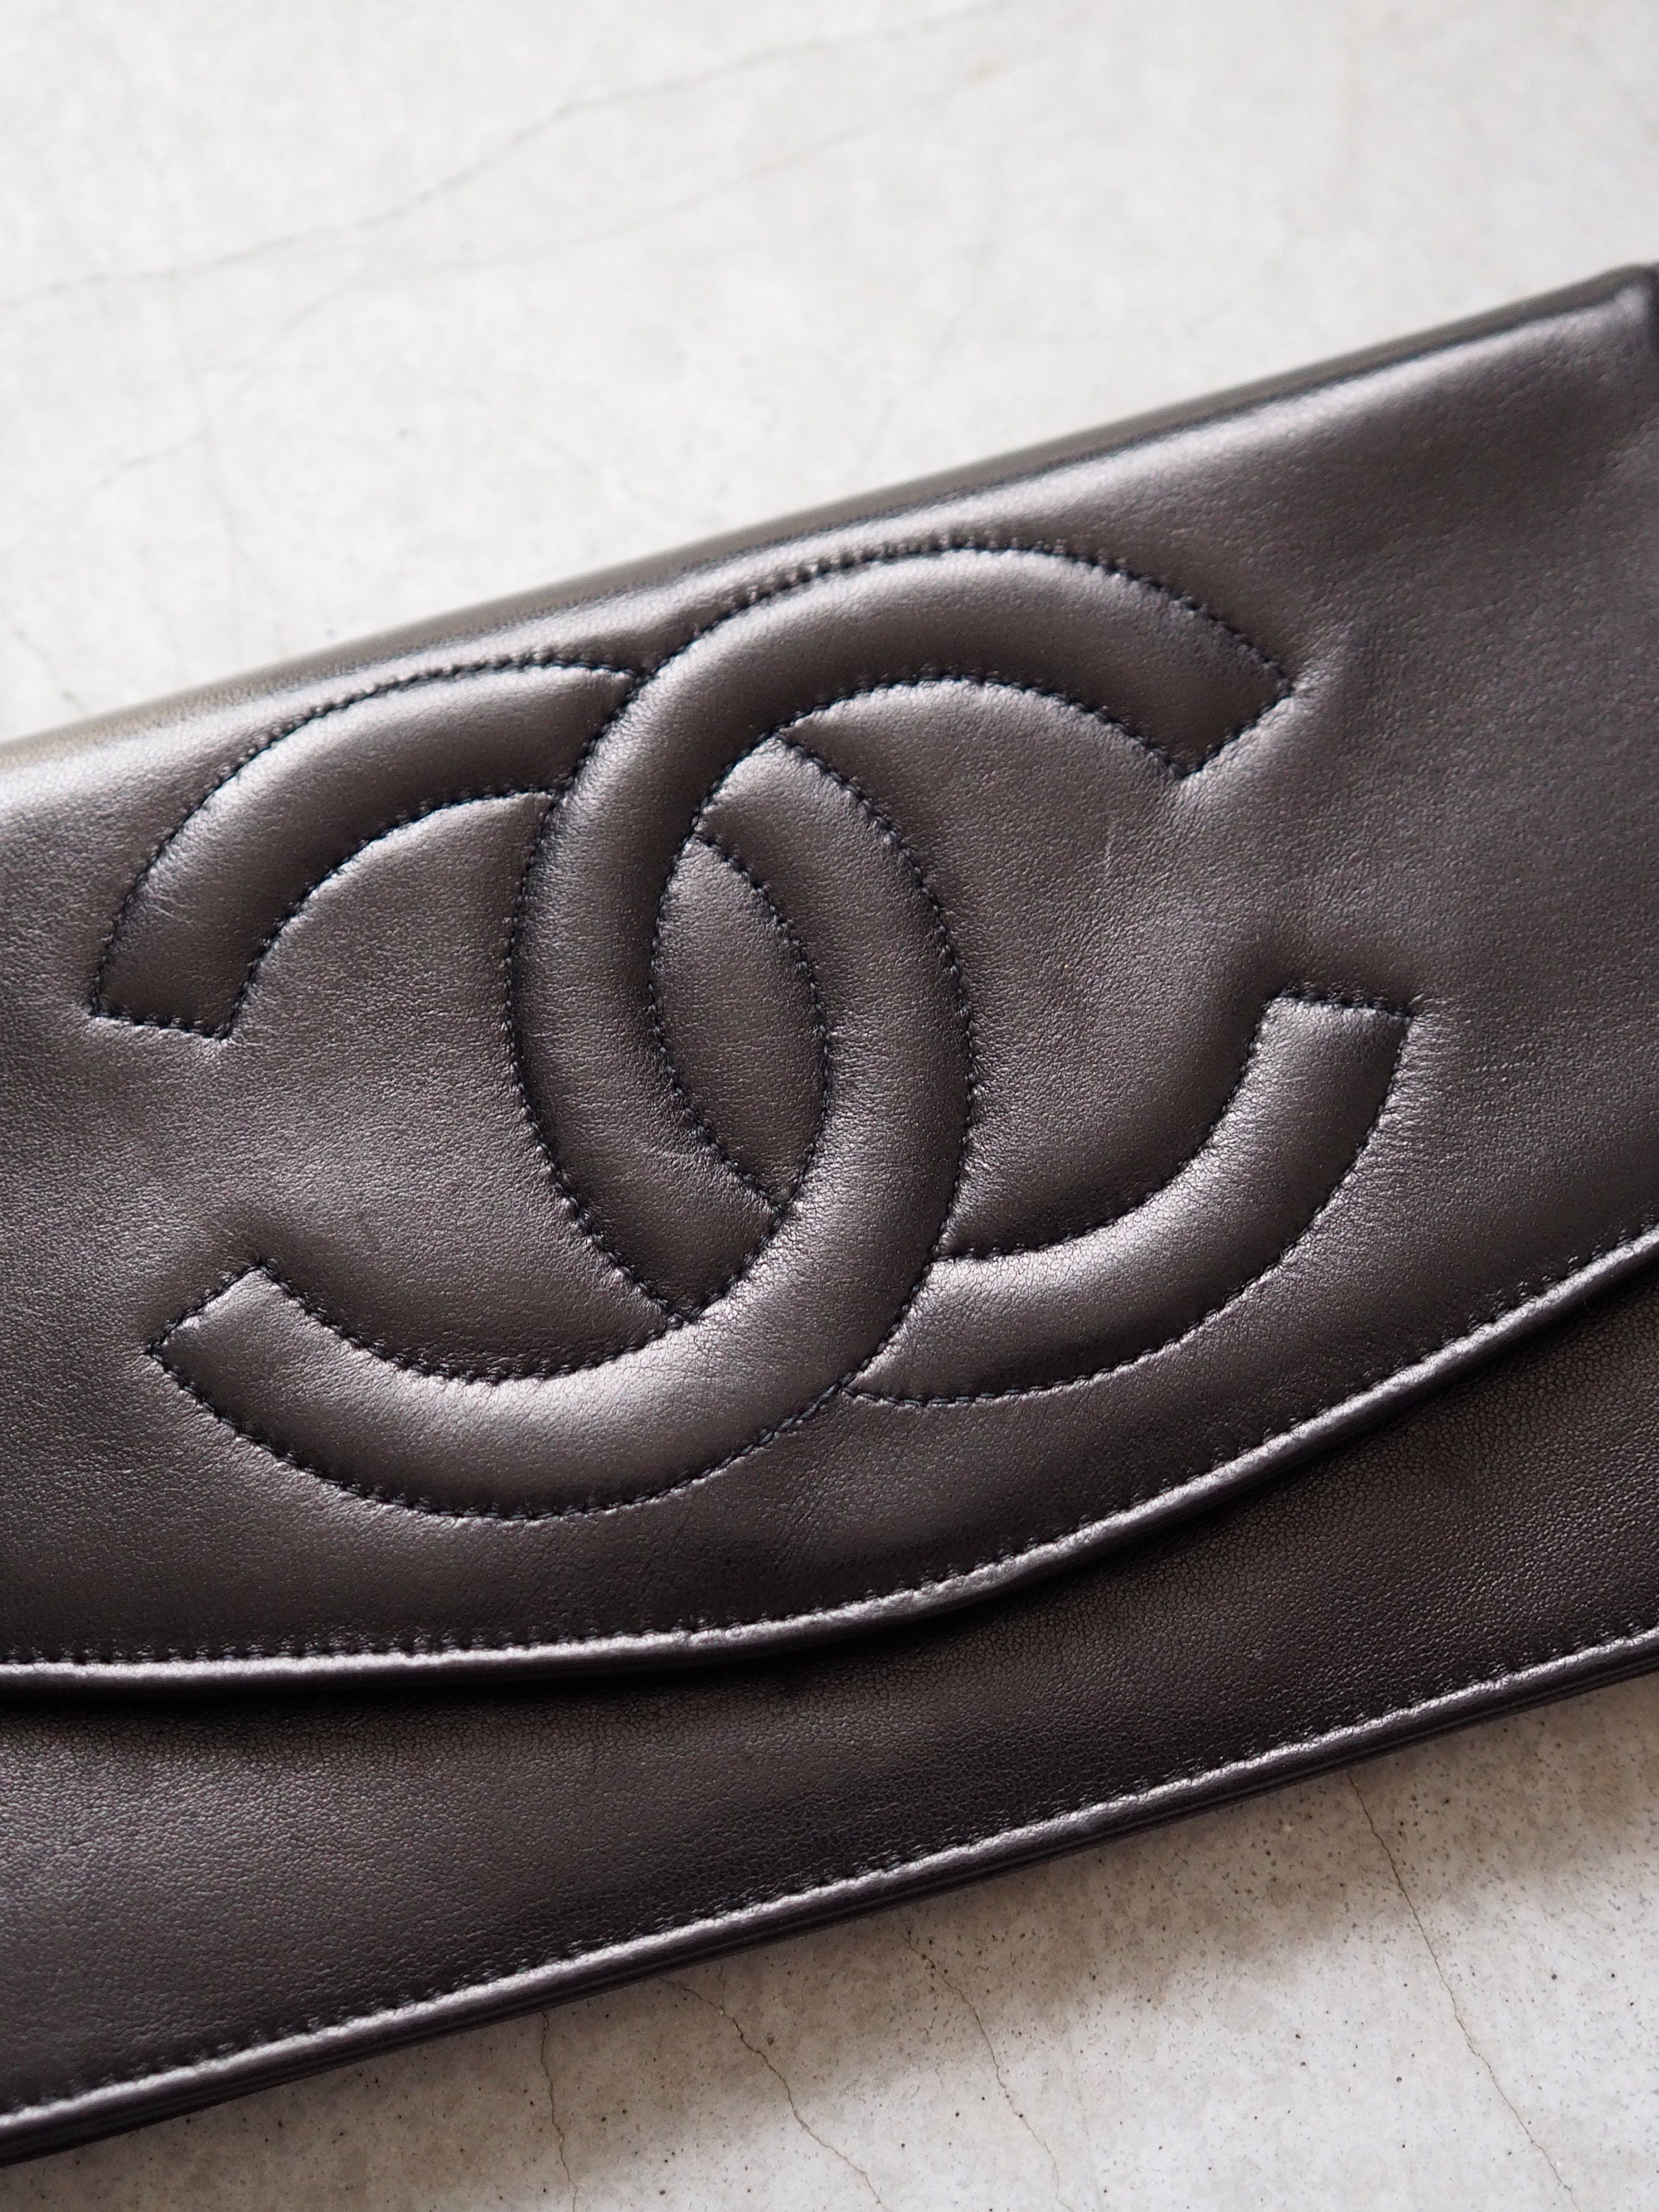 CHANEL COCO Long Wallet Purse CC Leather Black Authentic Vintage Box